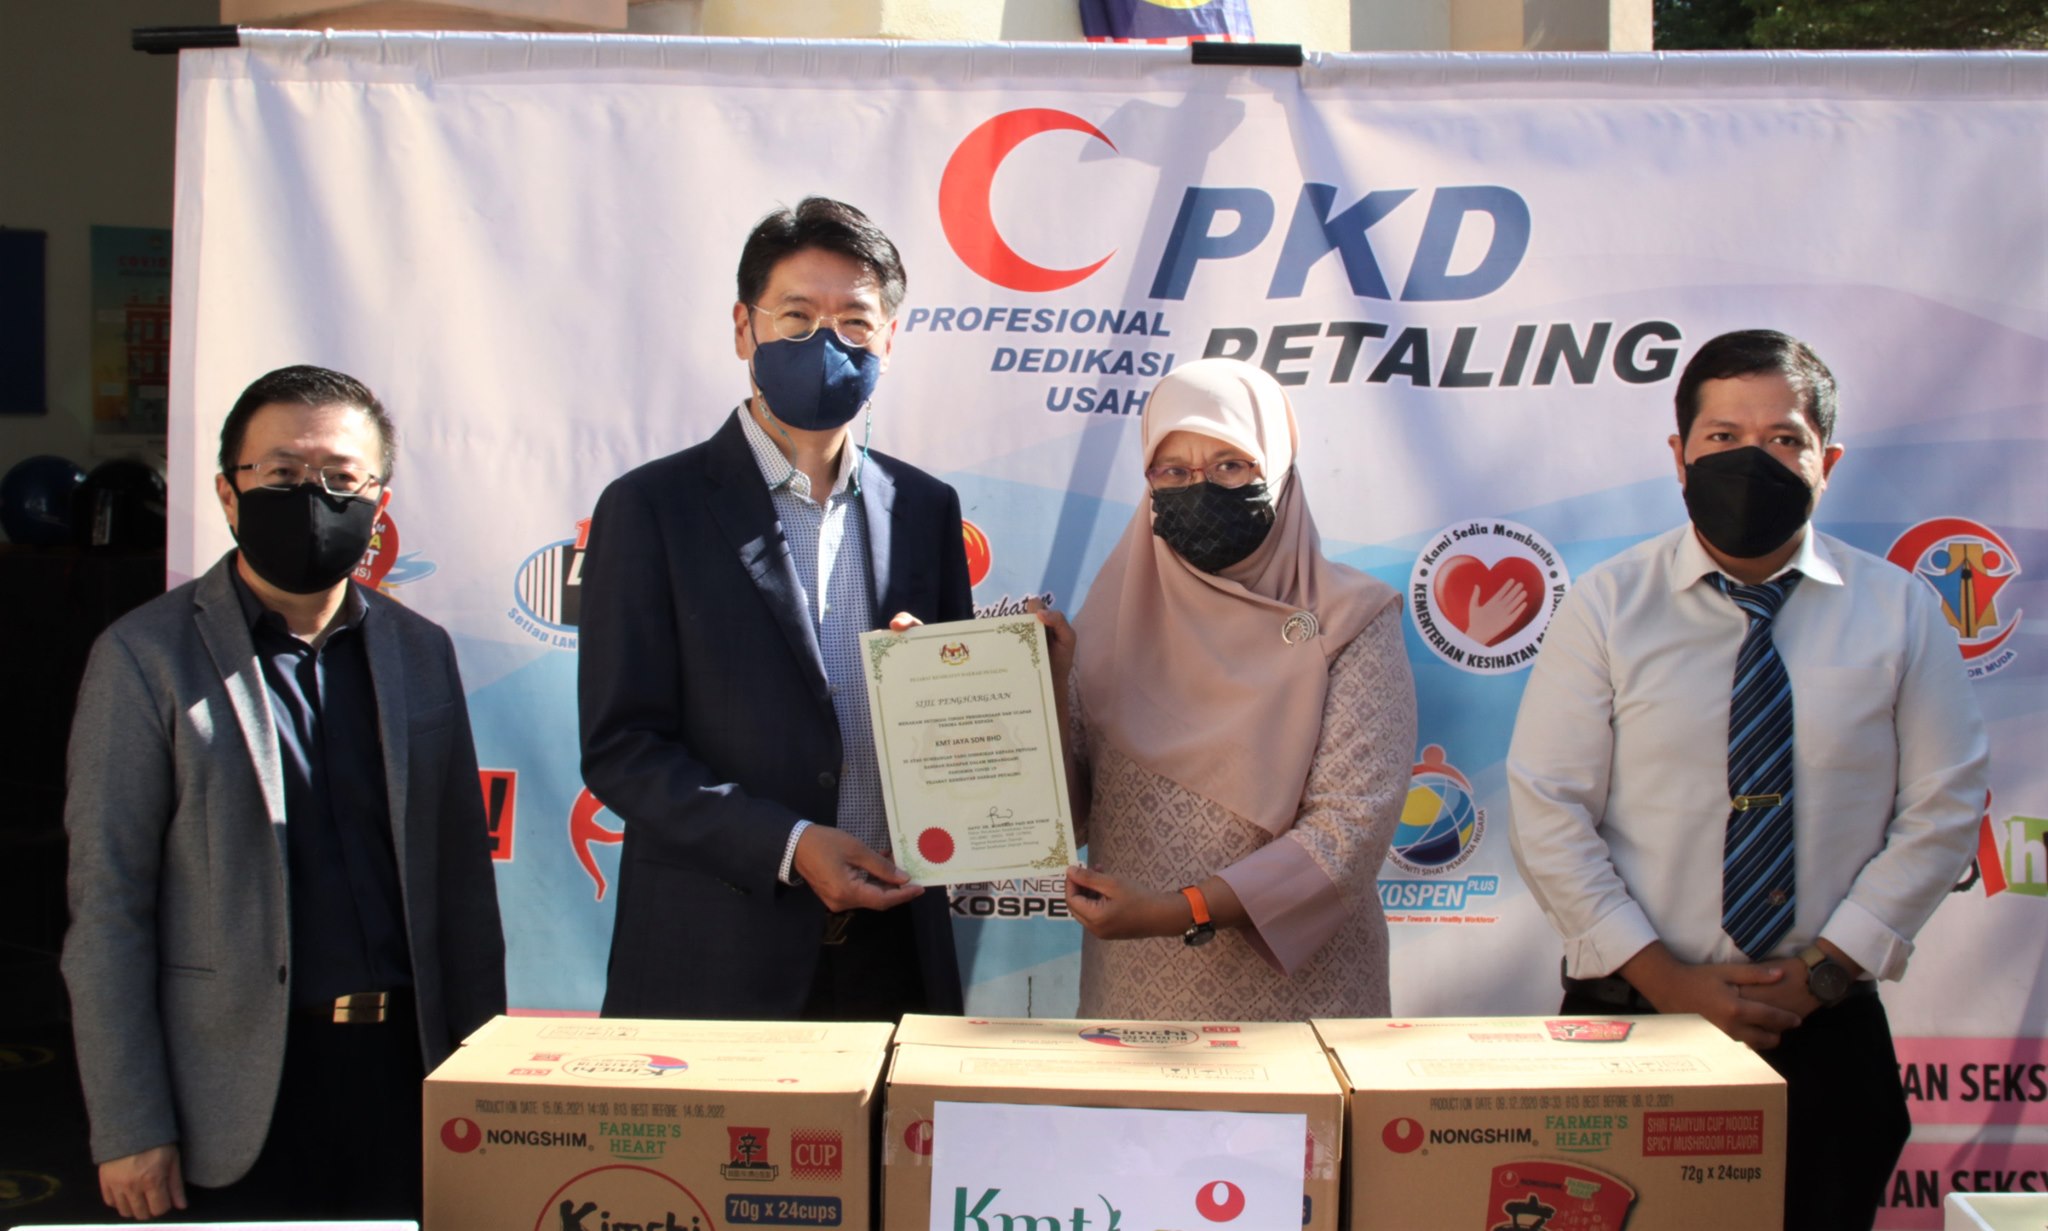 2021 Sep – KMT extending their support to Kementerian Kesihatan Malaysia (KKM)